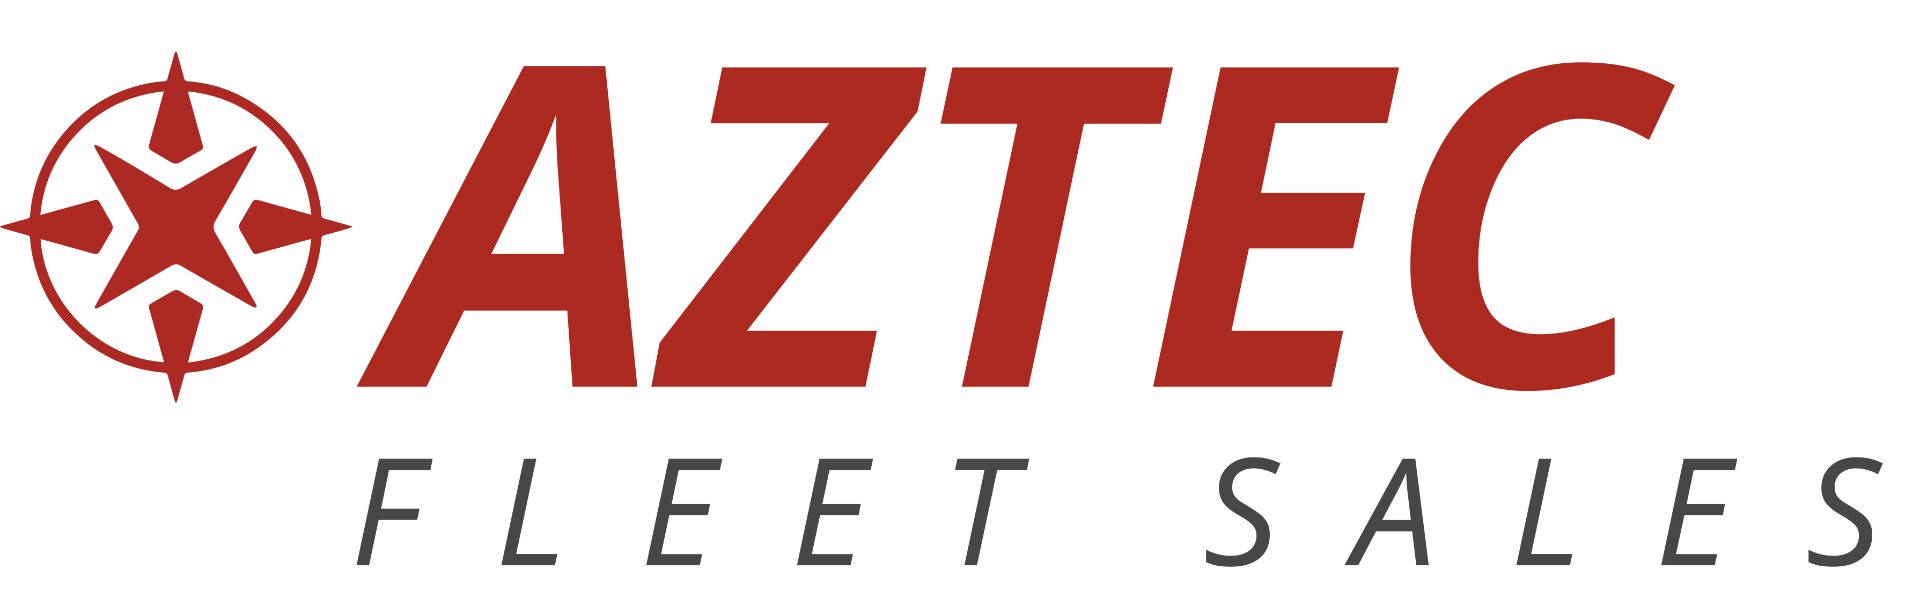 Aztec fleet sales logo.